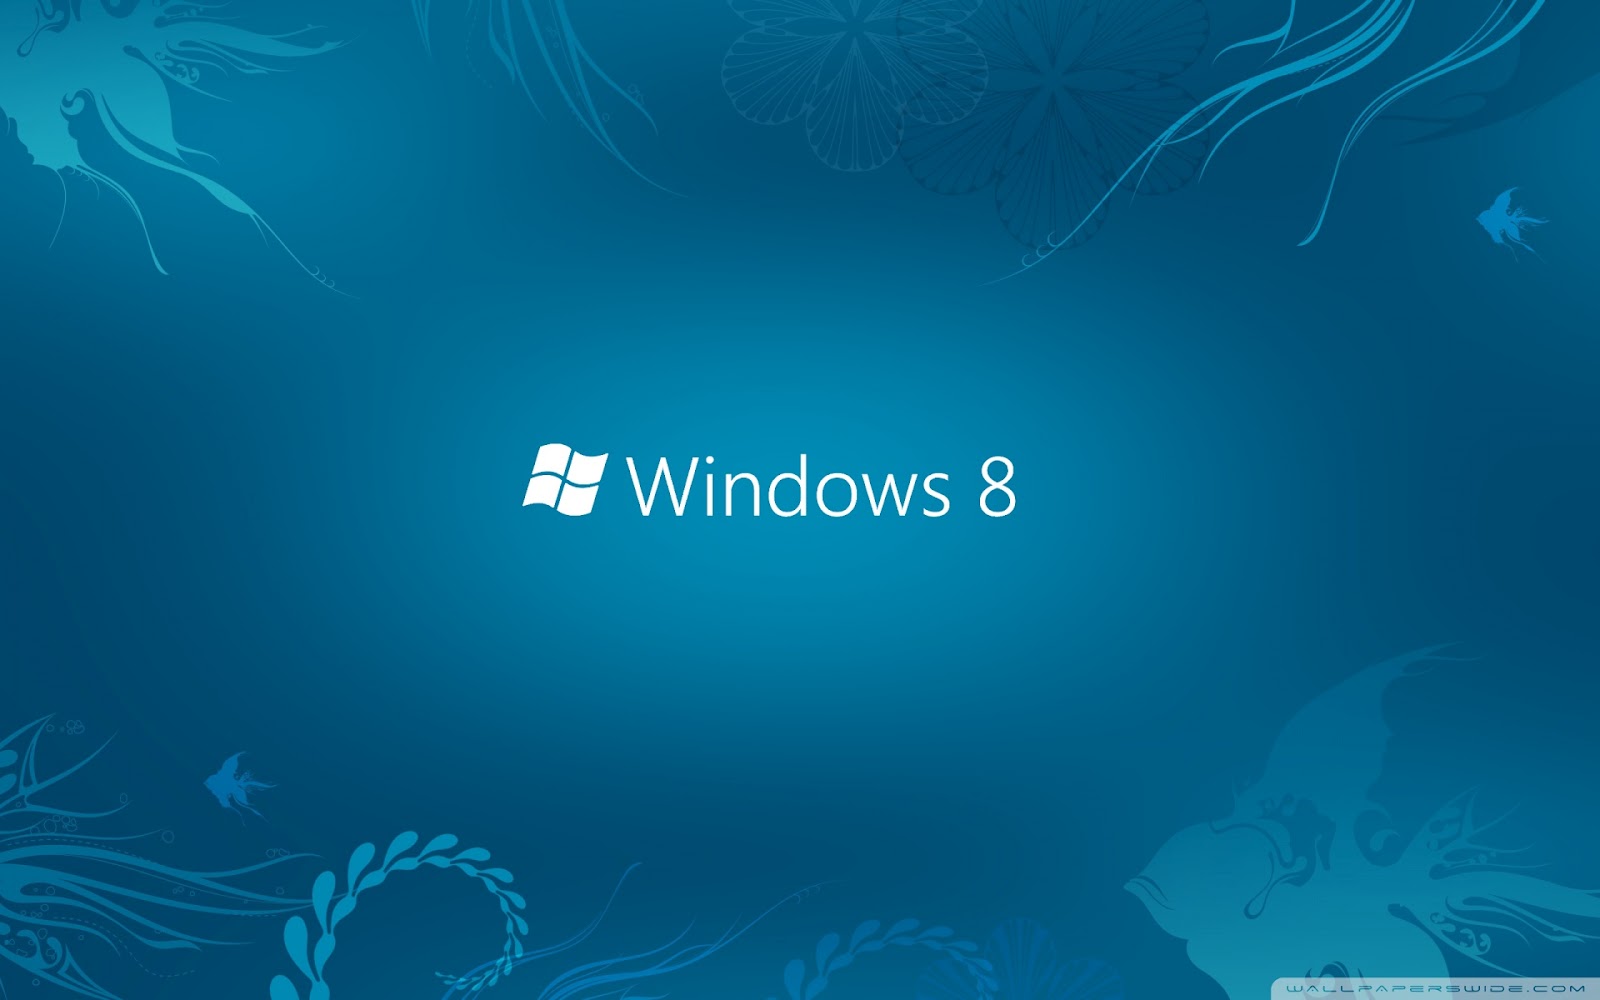 Windows 8 Hd 1080p Wallpapers Part 1 ~ Free HD Desktop Wallpapers